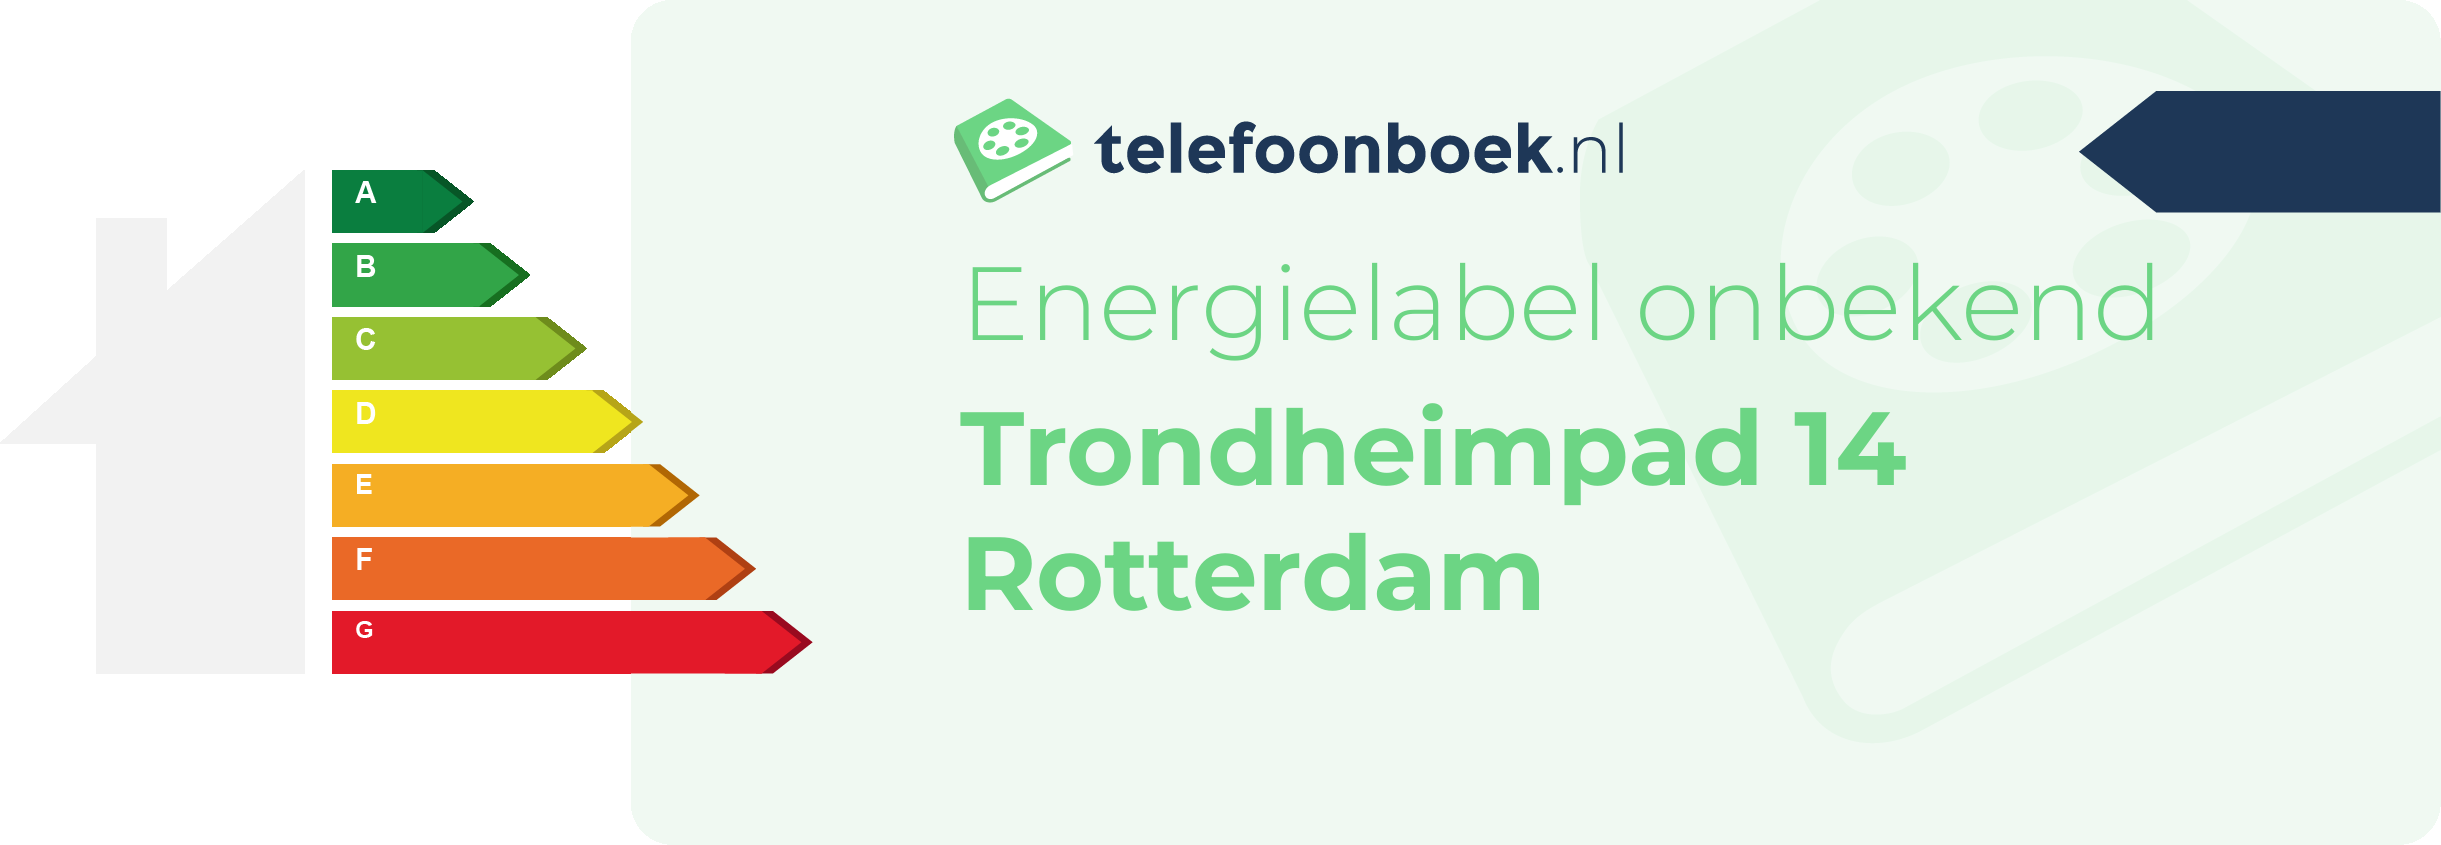 Energielabel Trondheimpad 14 Rotterdam